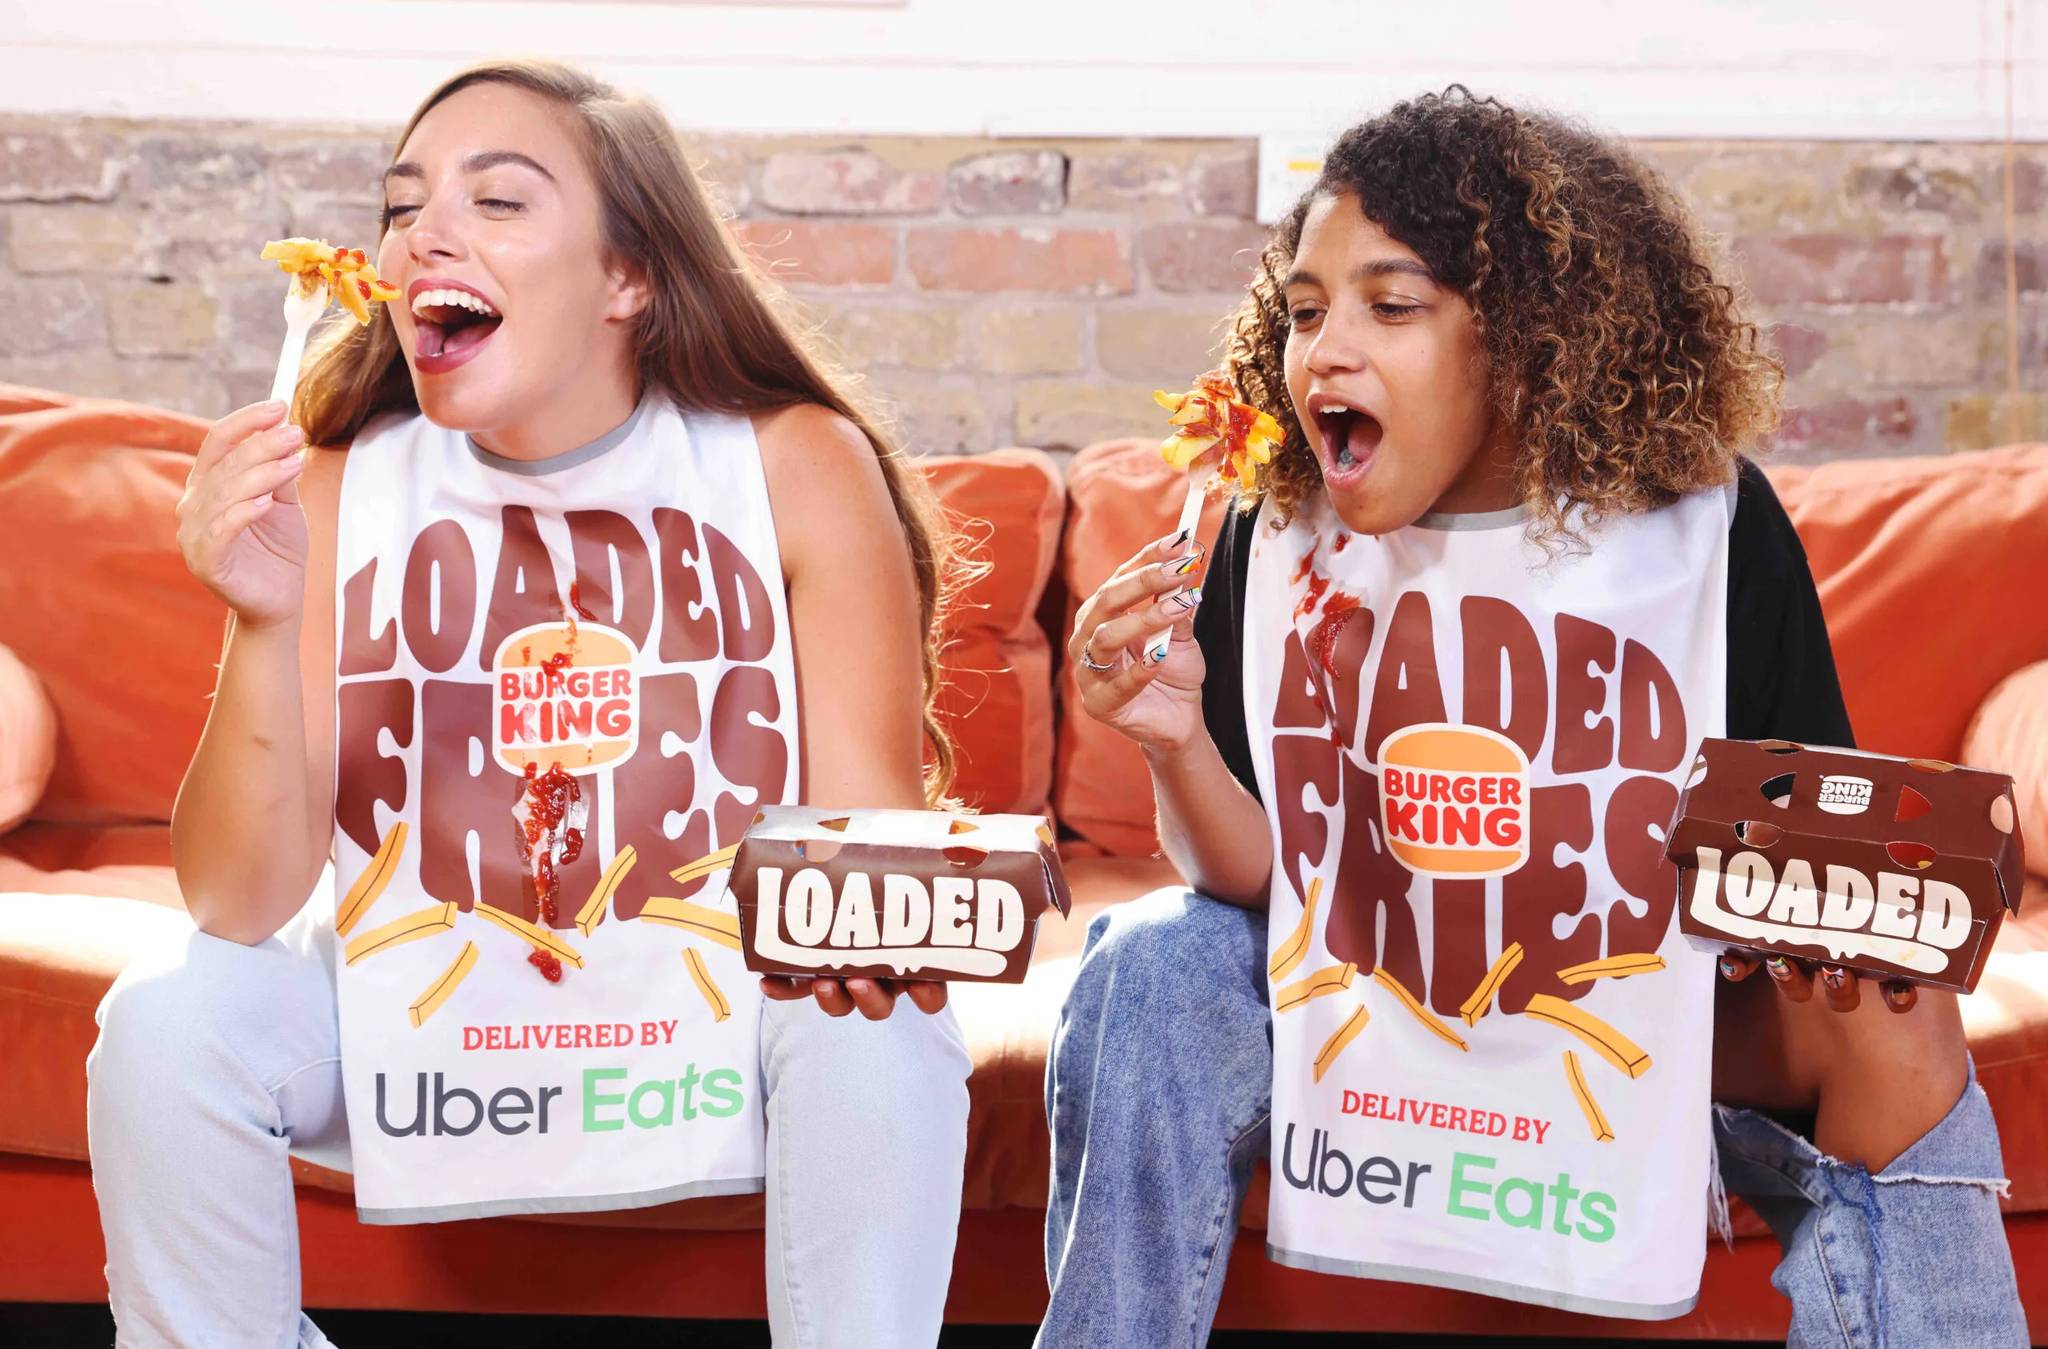 Burger King x Uber Eats brings messy indulgence to dinner